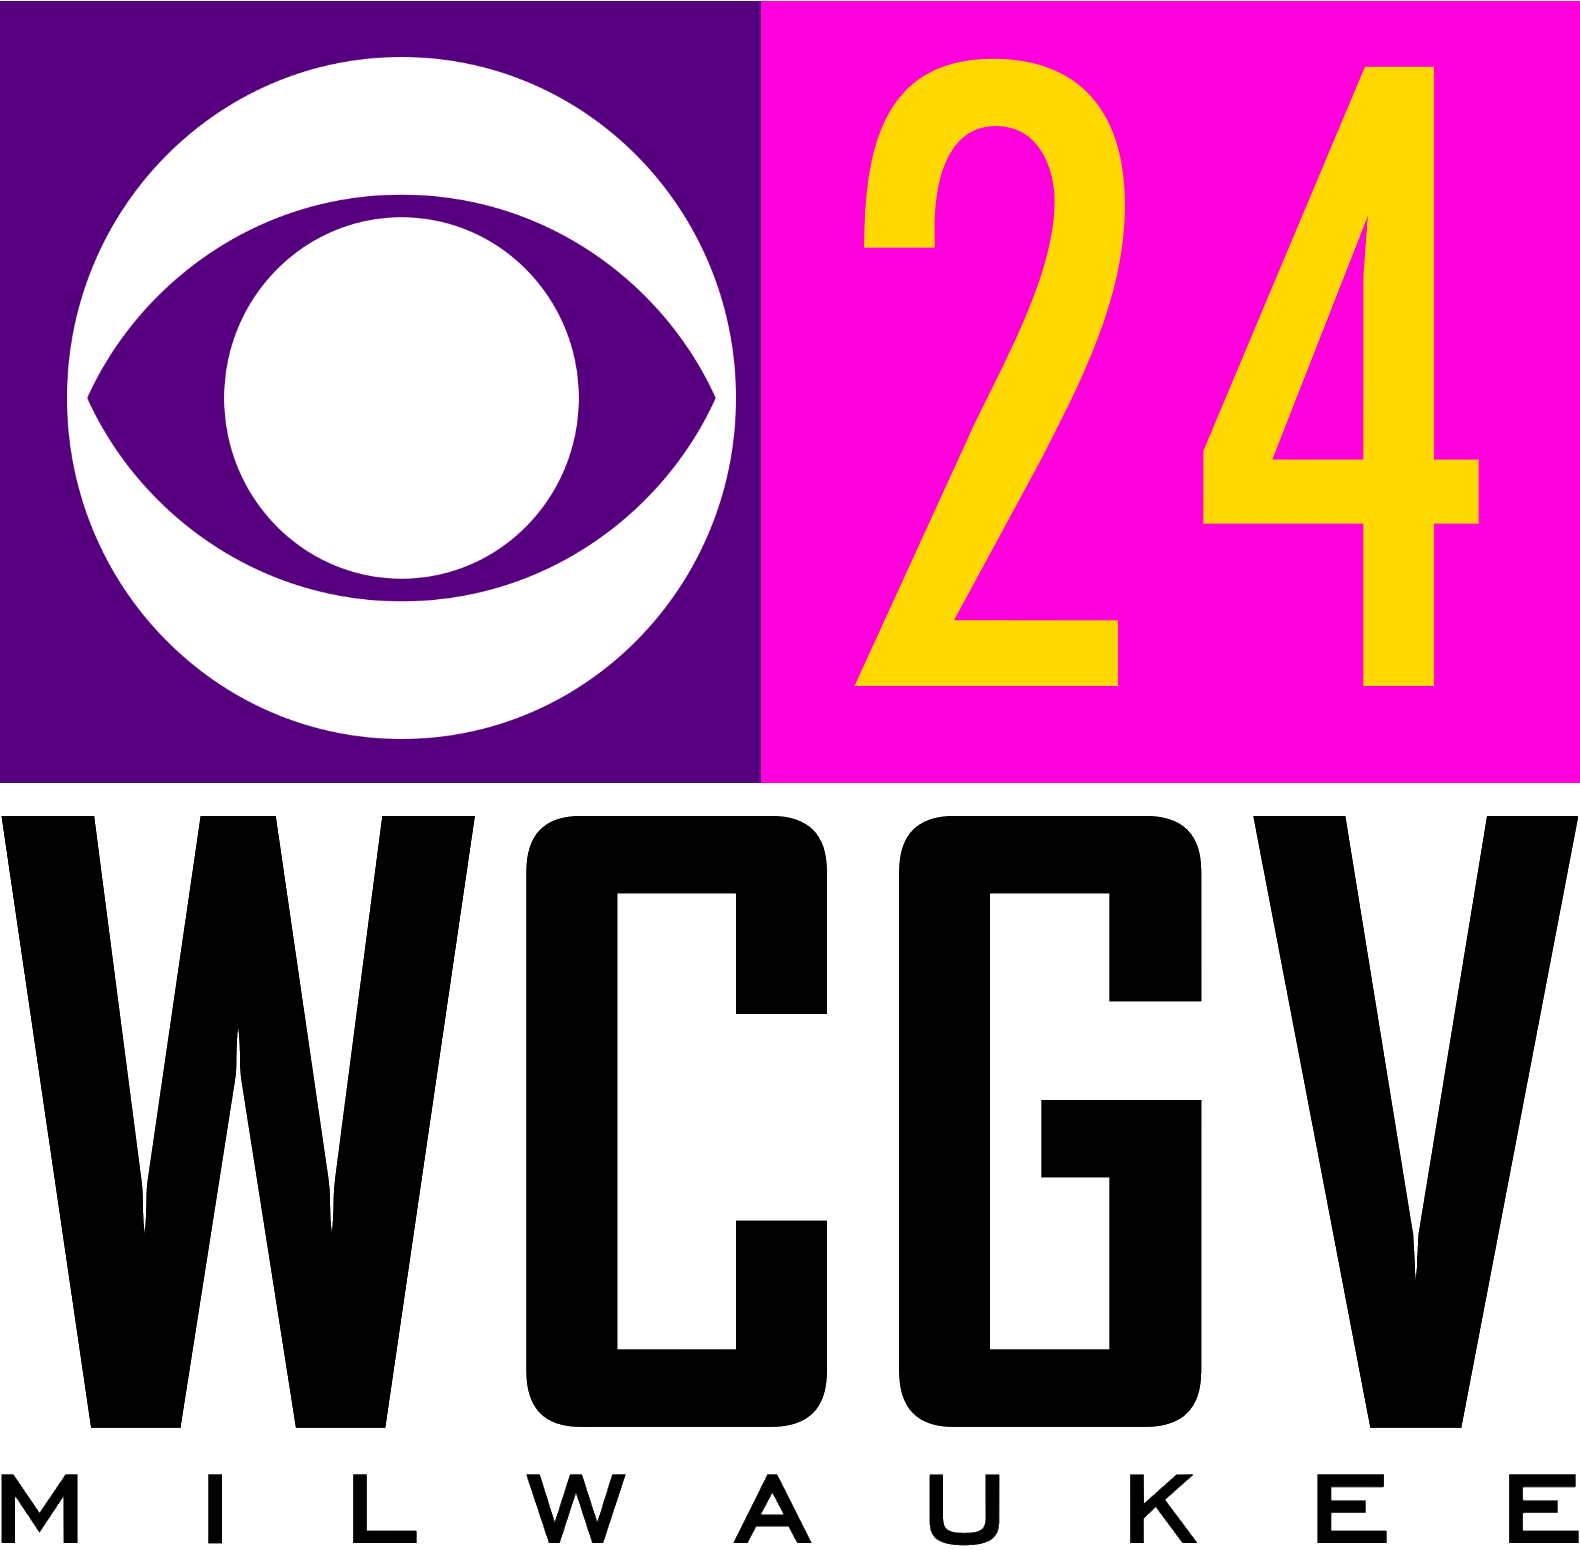 AlternateHistory.com's WCGV logo #1.png